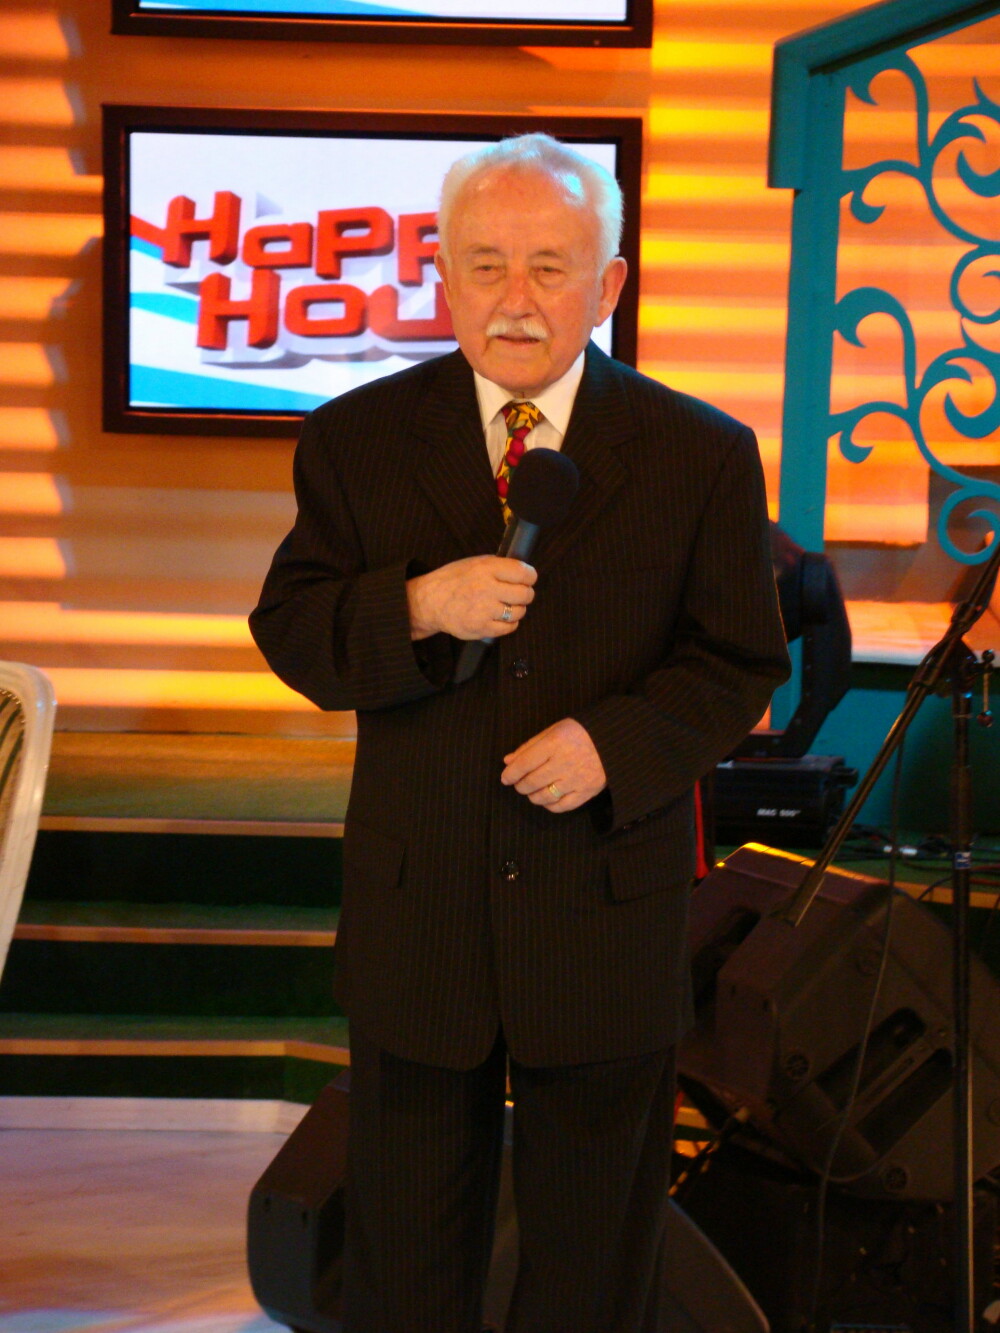 La ”Happy Hour”, tatal lui Irinel Columbeanu a cantat in premiera la TV - Imaginea 1